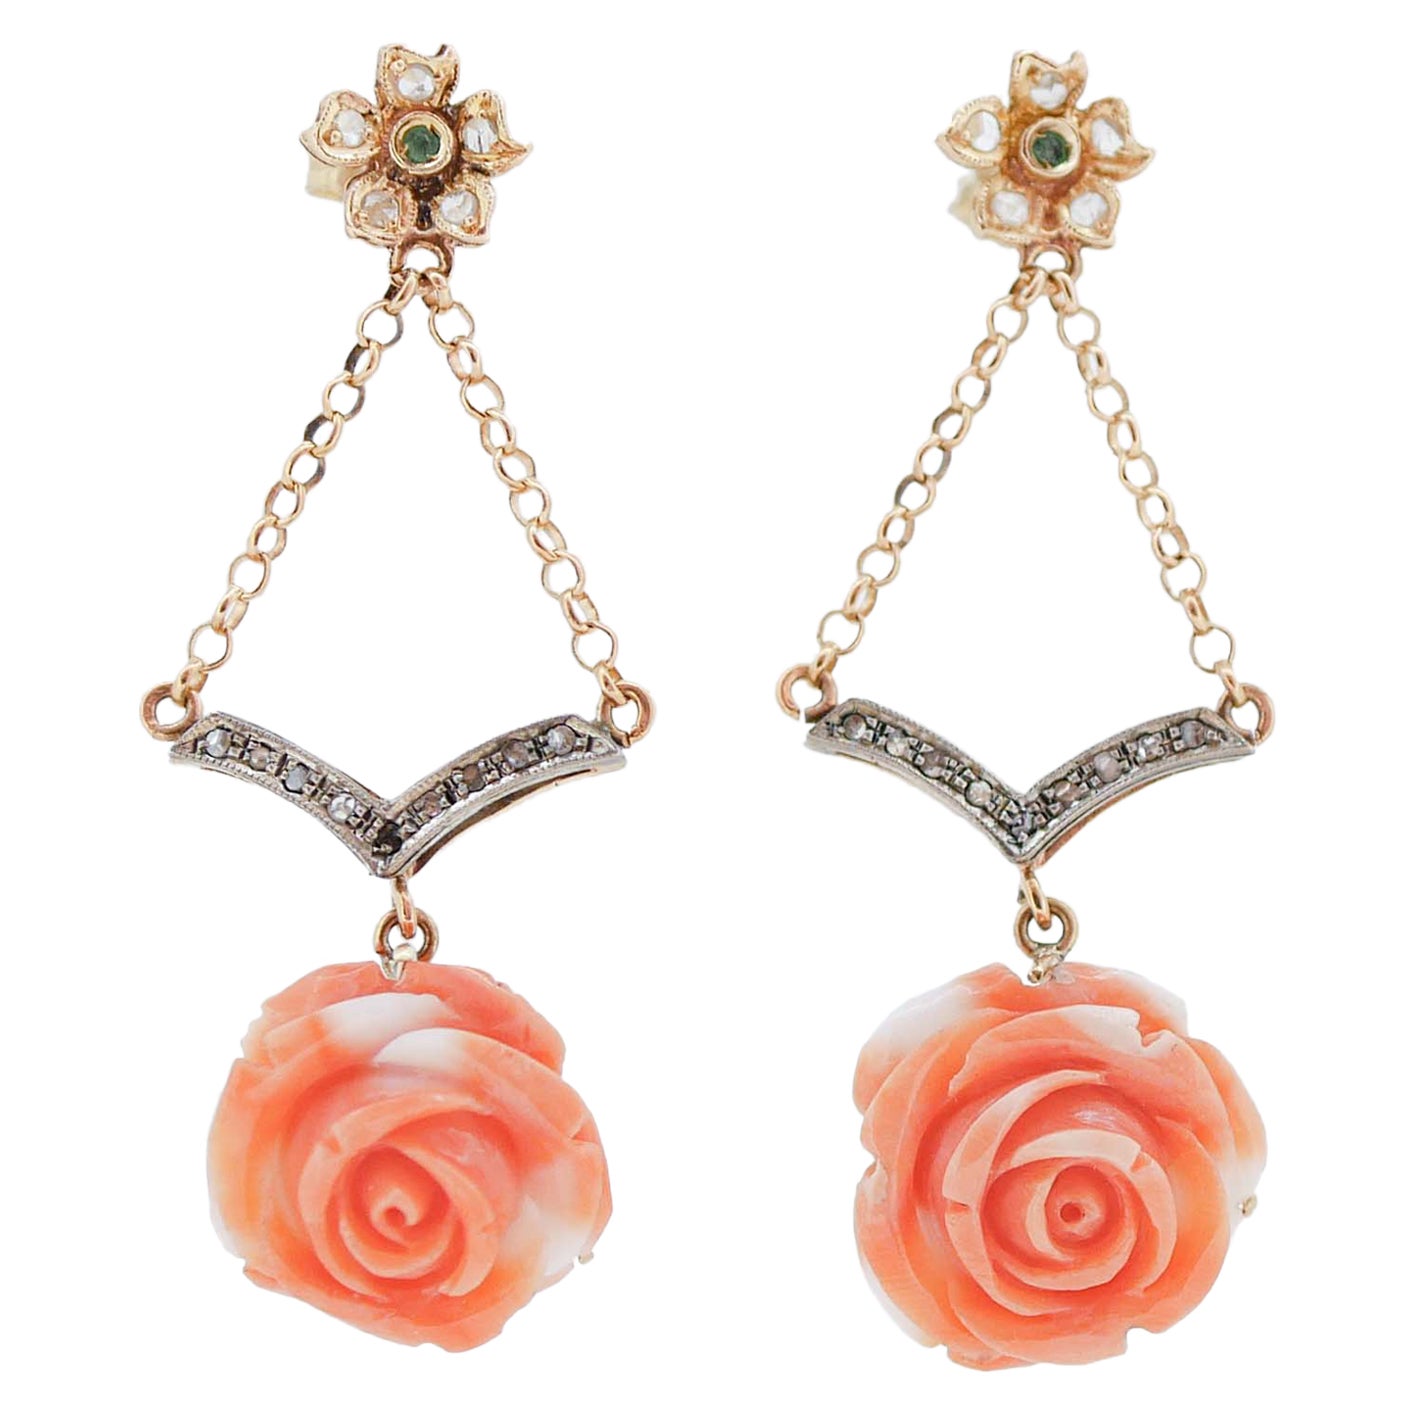 Coral, Tsavorite, Diamonds, 14 Karat Rose Gold and Silver Dangle Earrings. For Sale